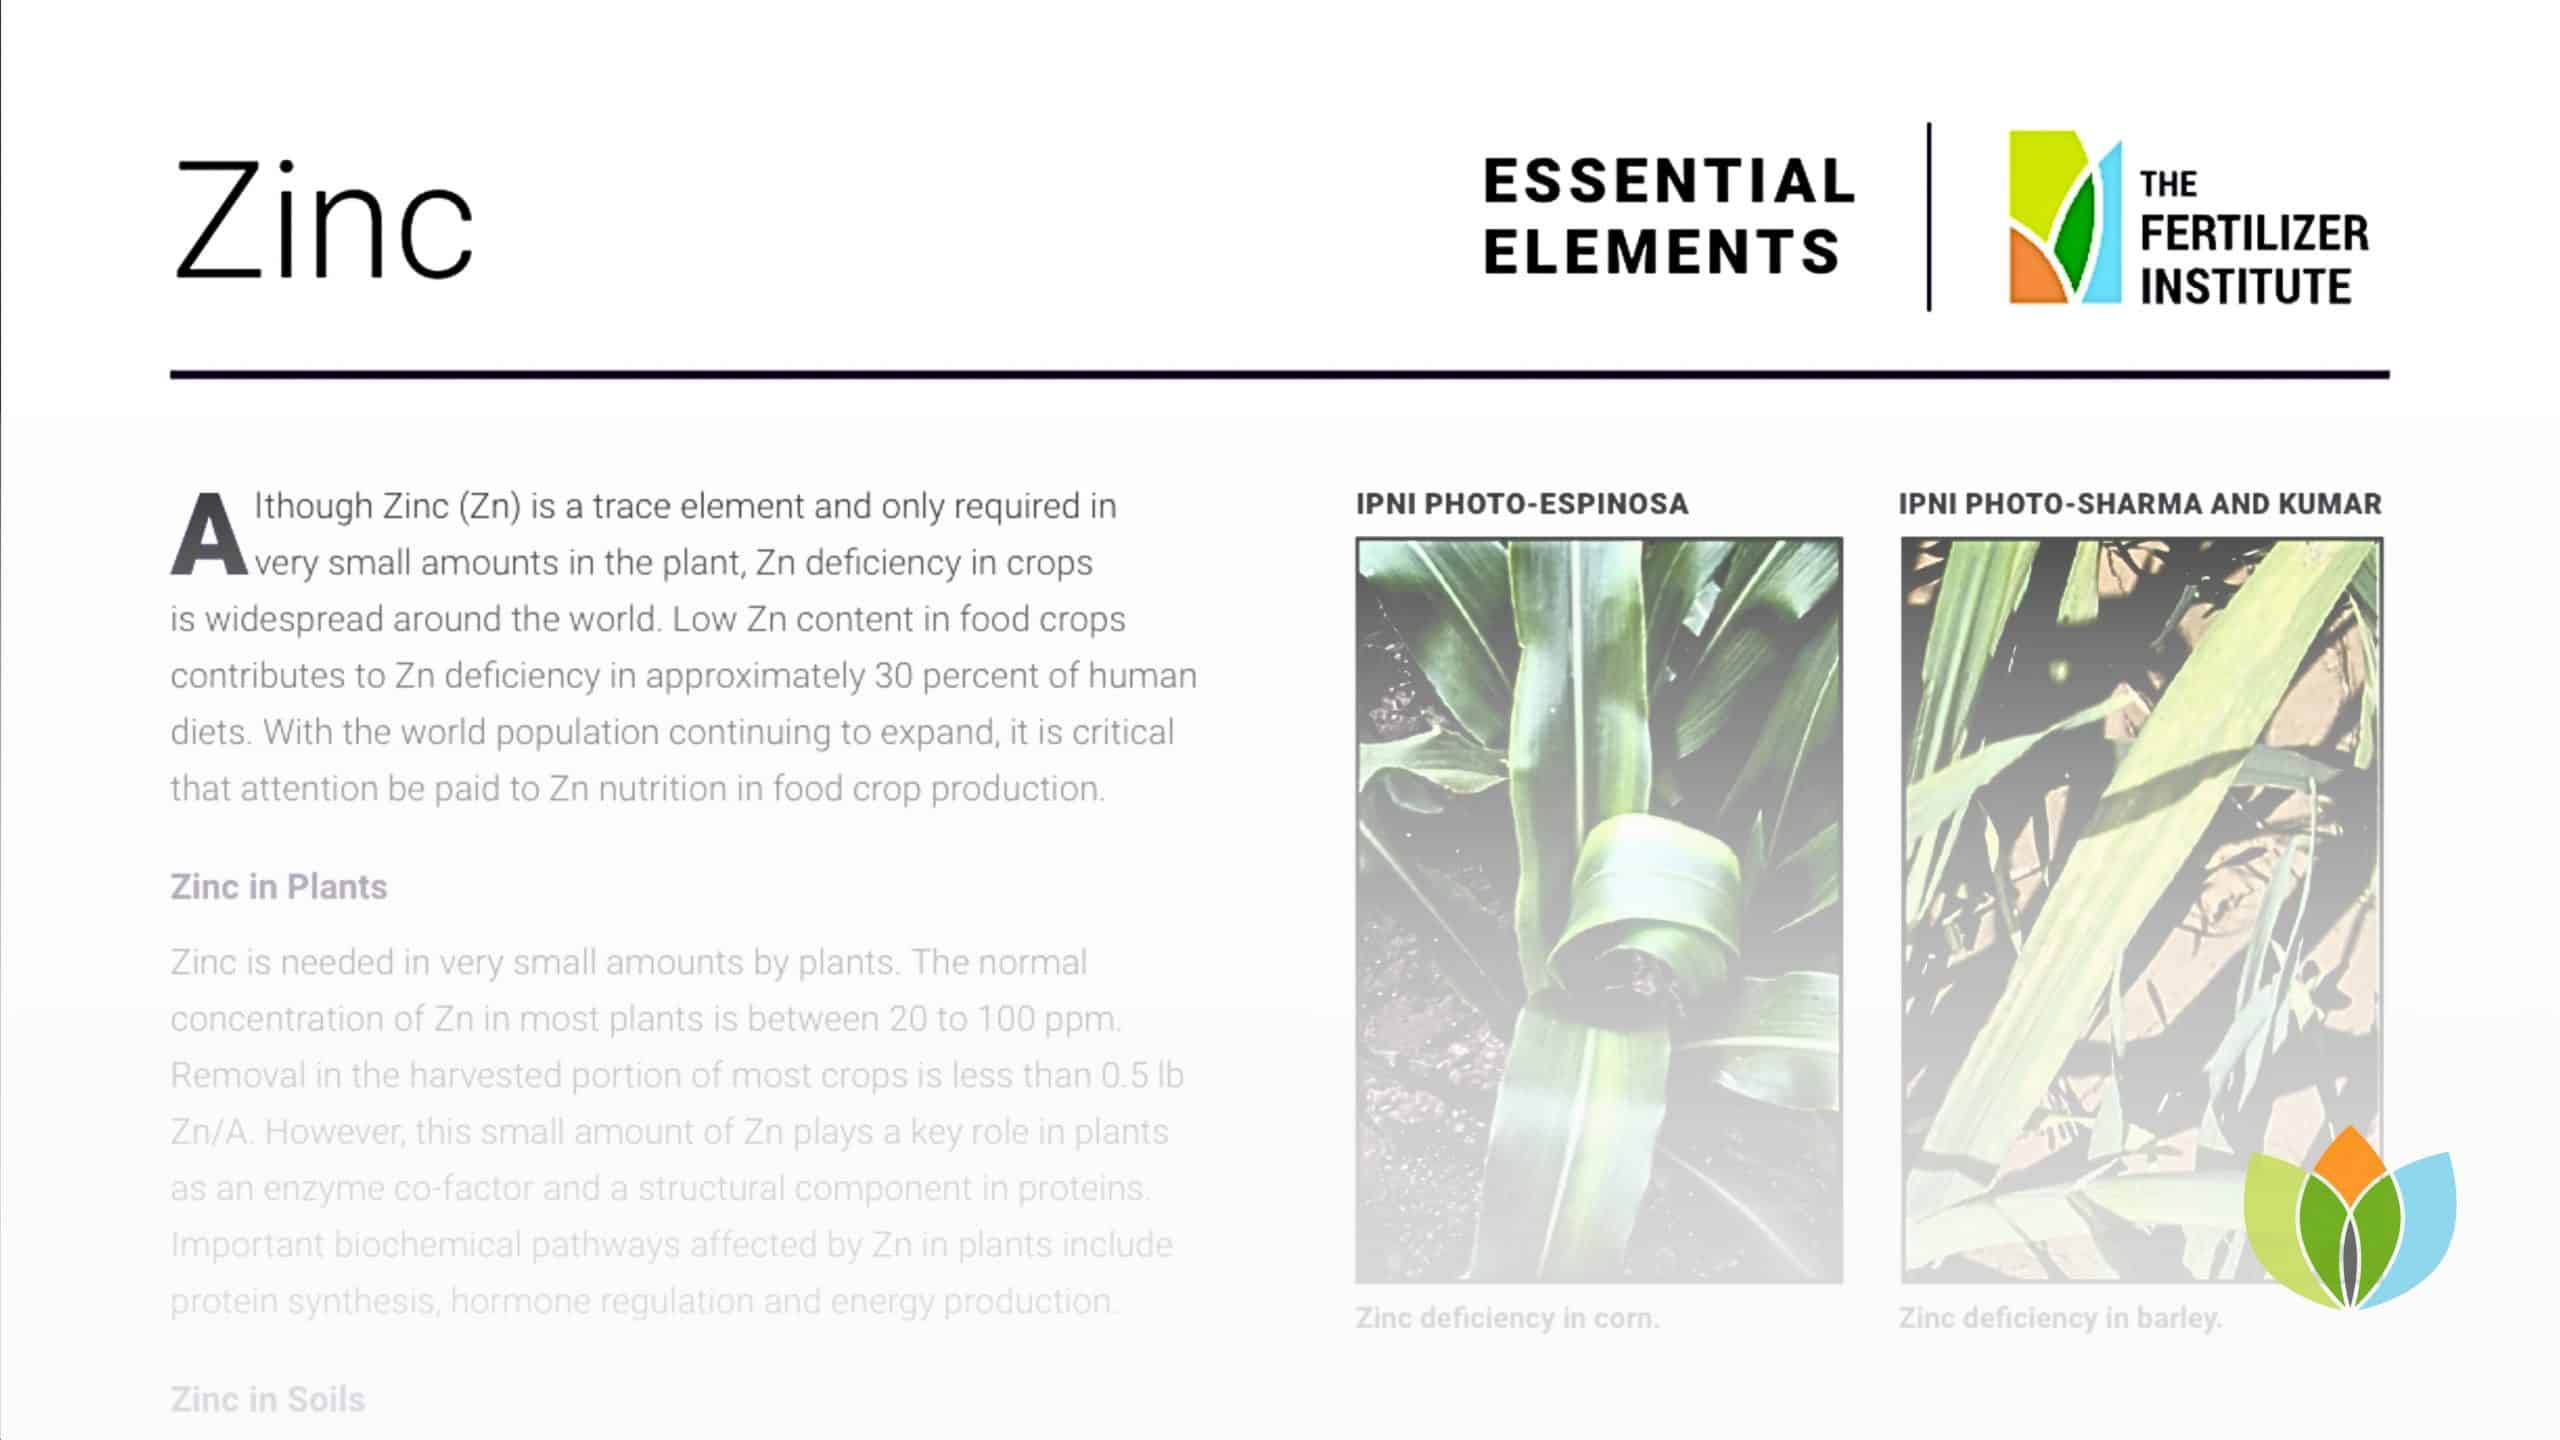 Essential Elements: Zinc